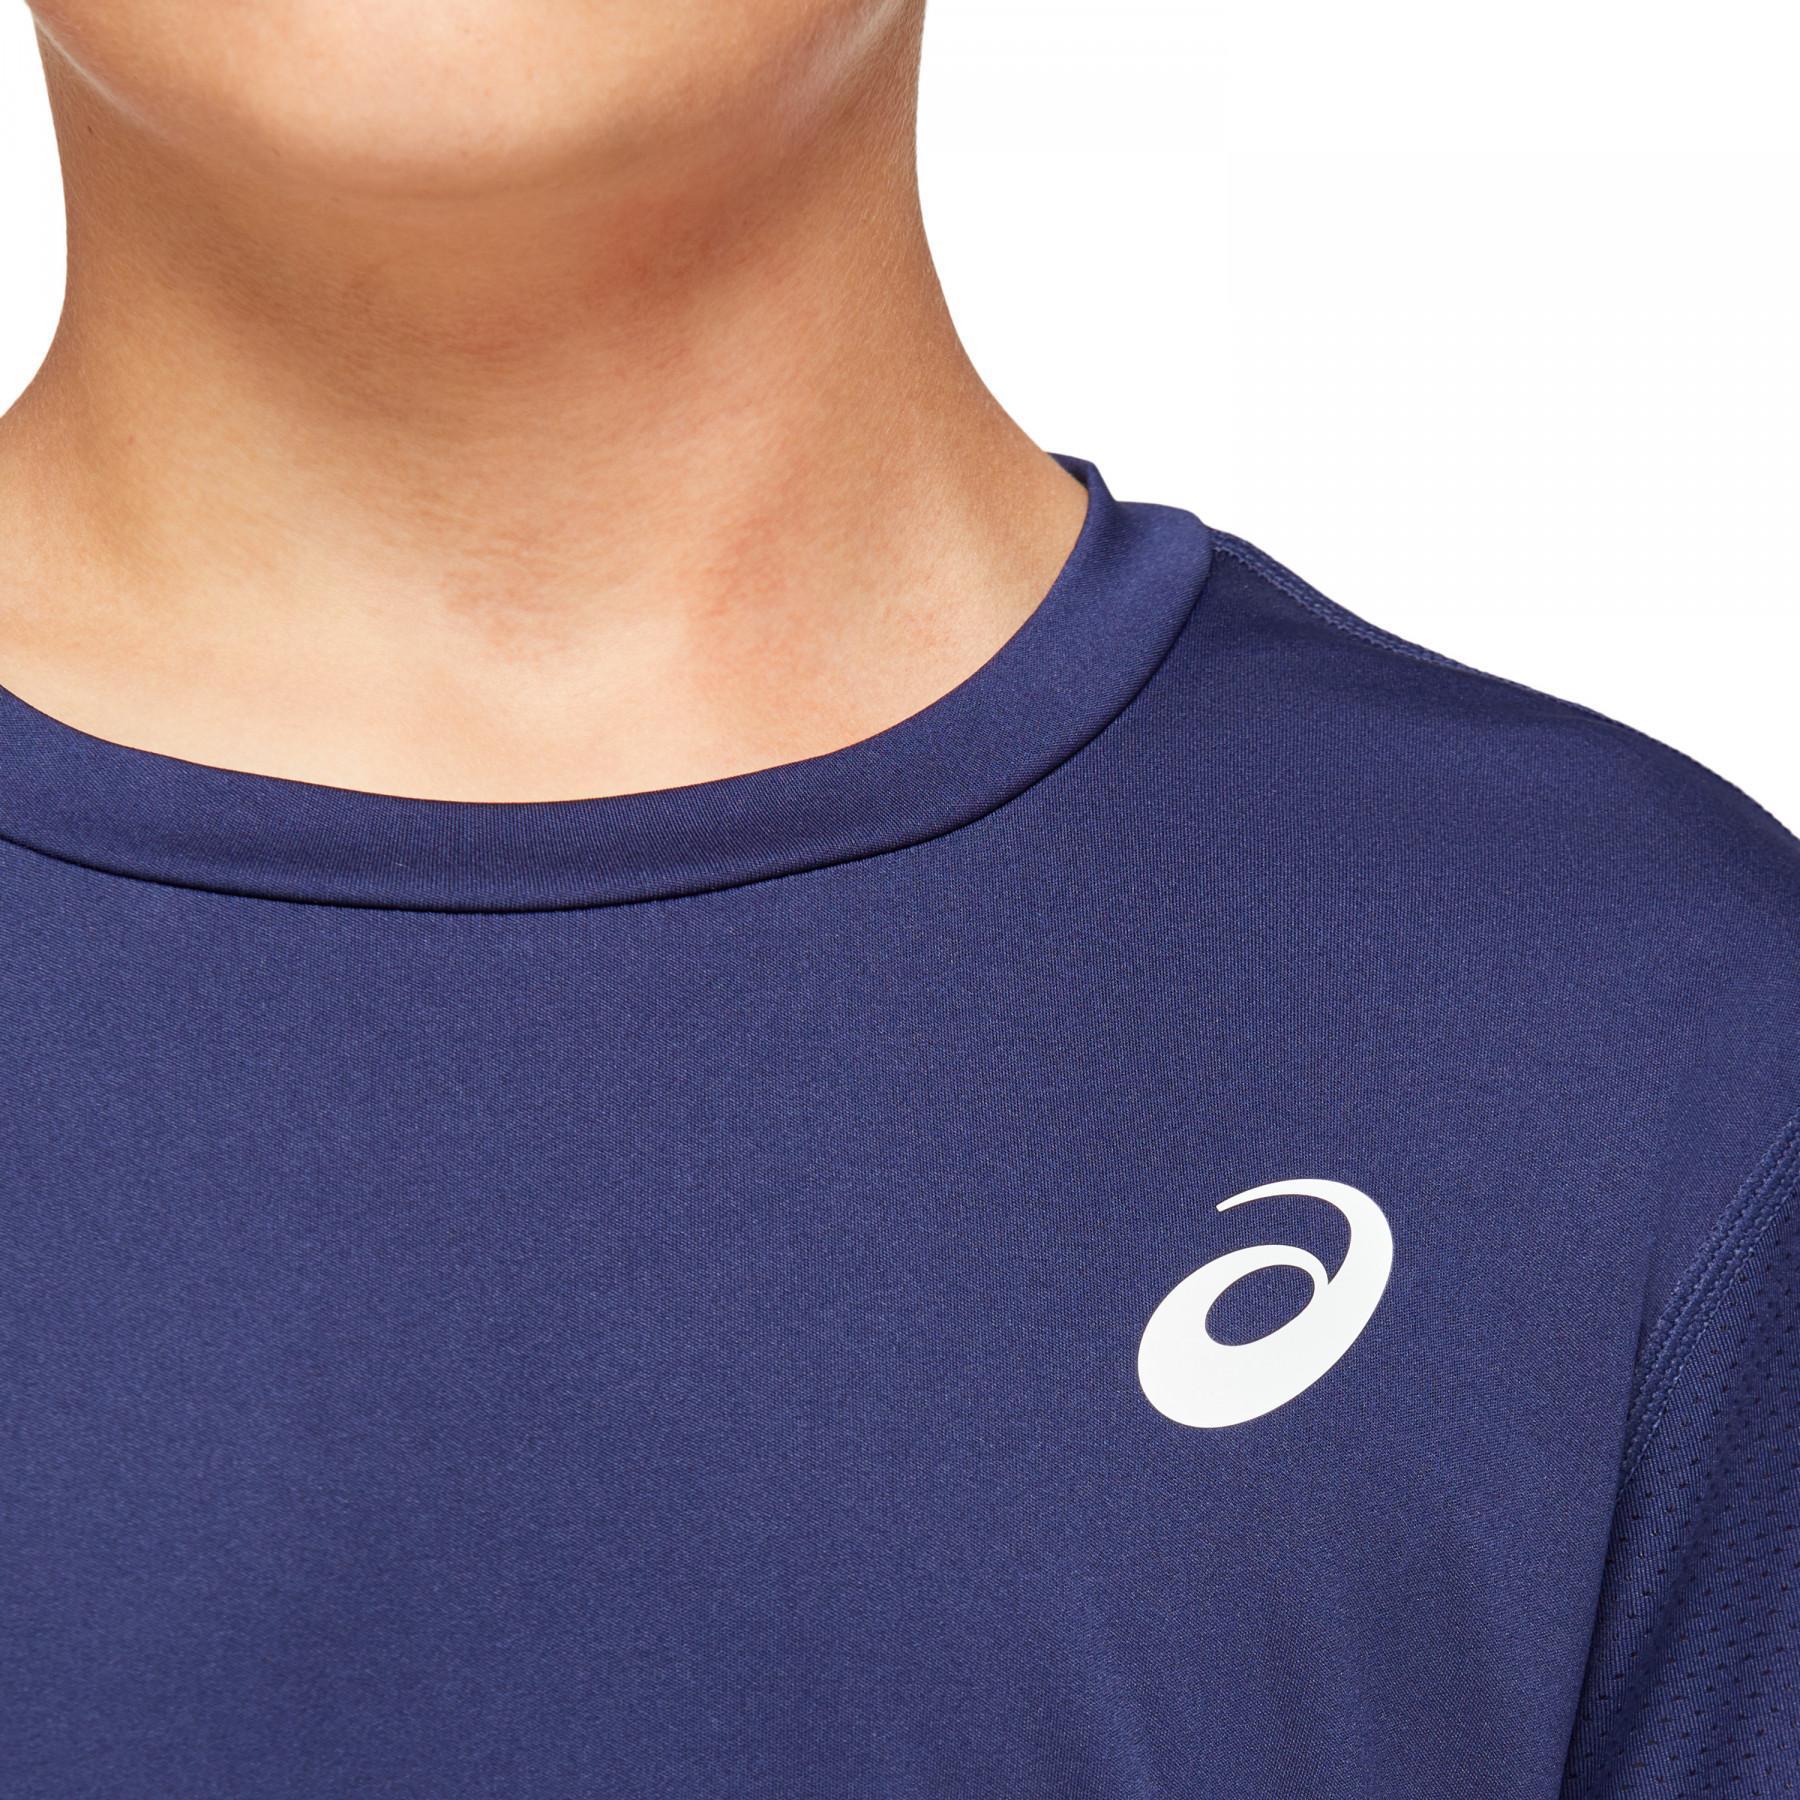 Camiseta para niños Asics Tennis Club